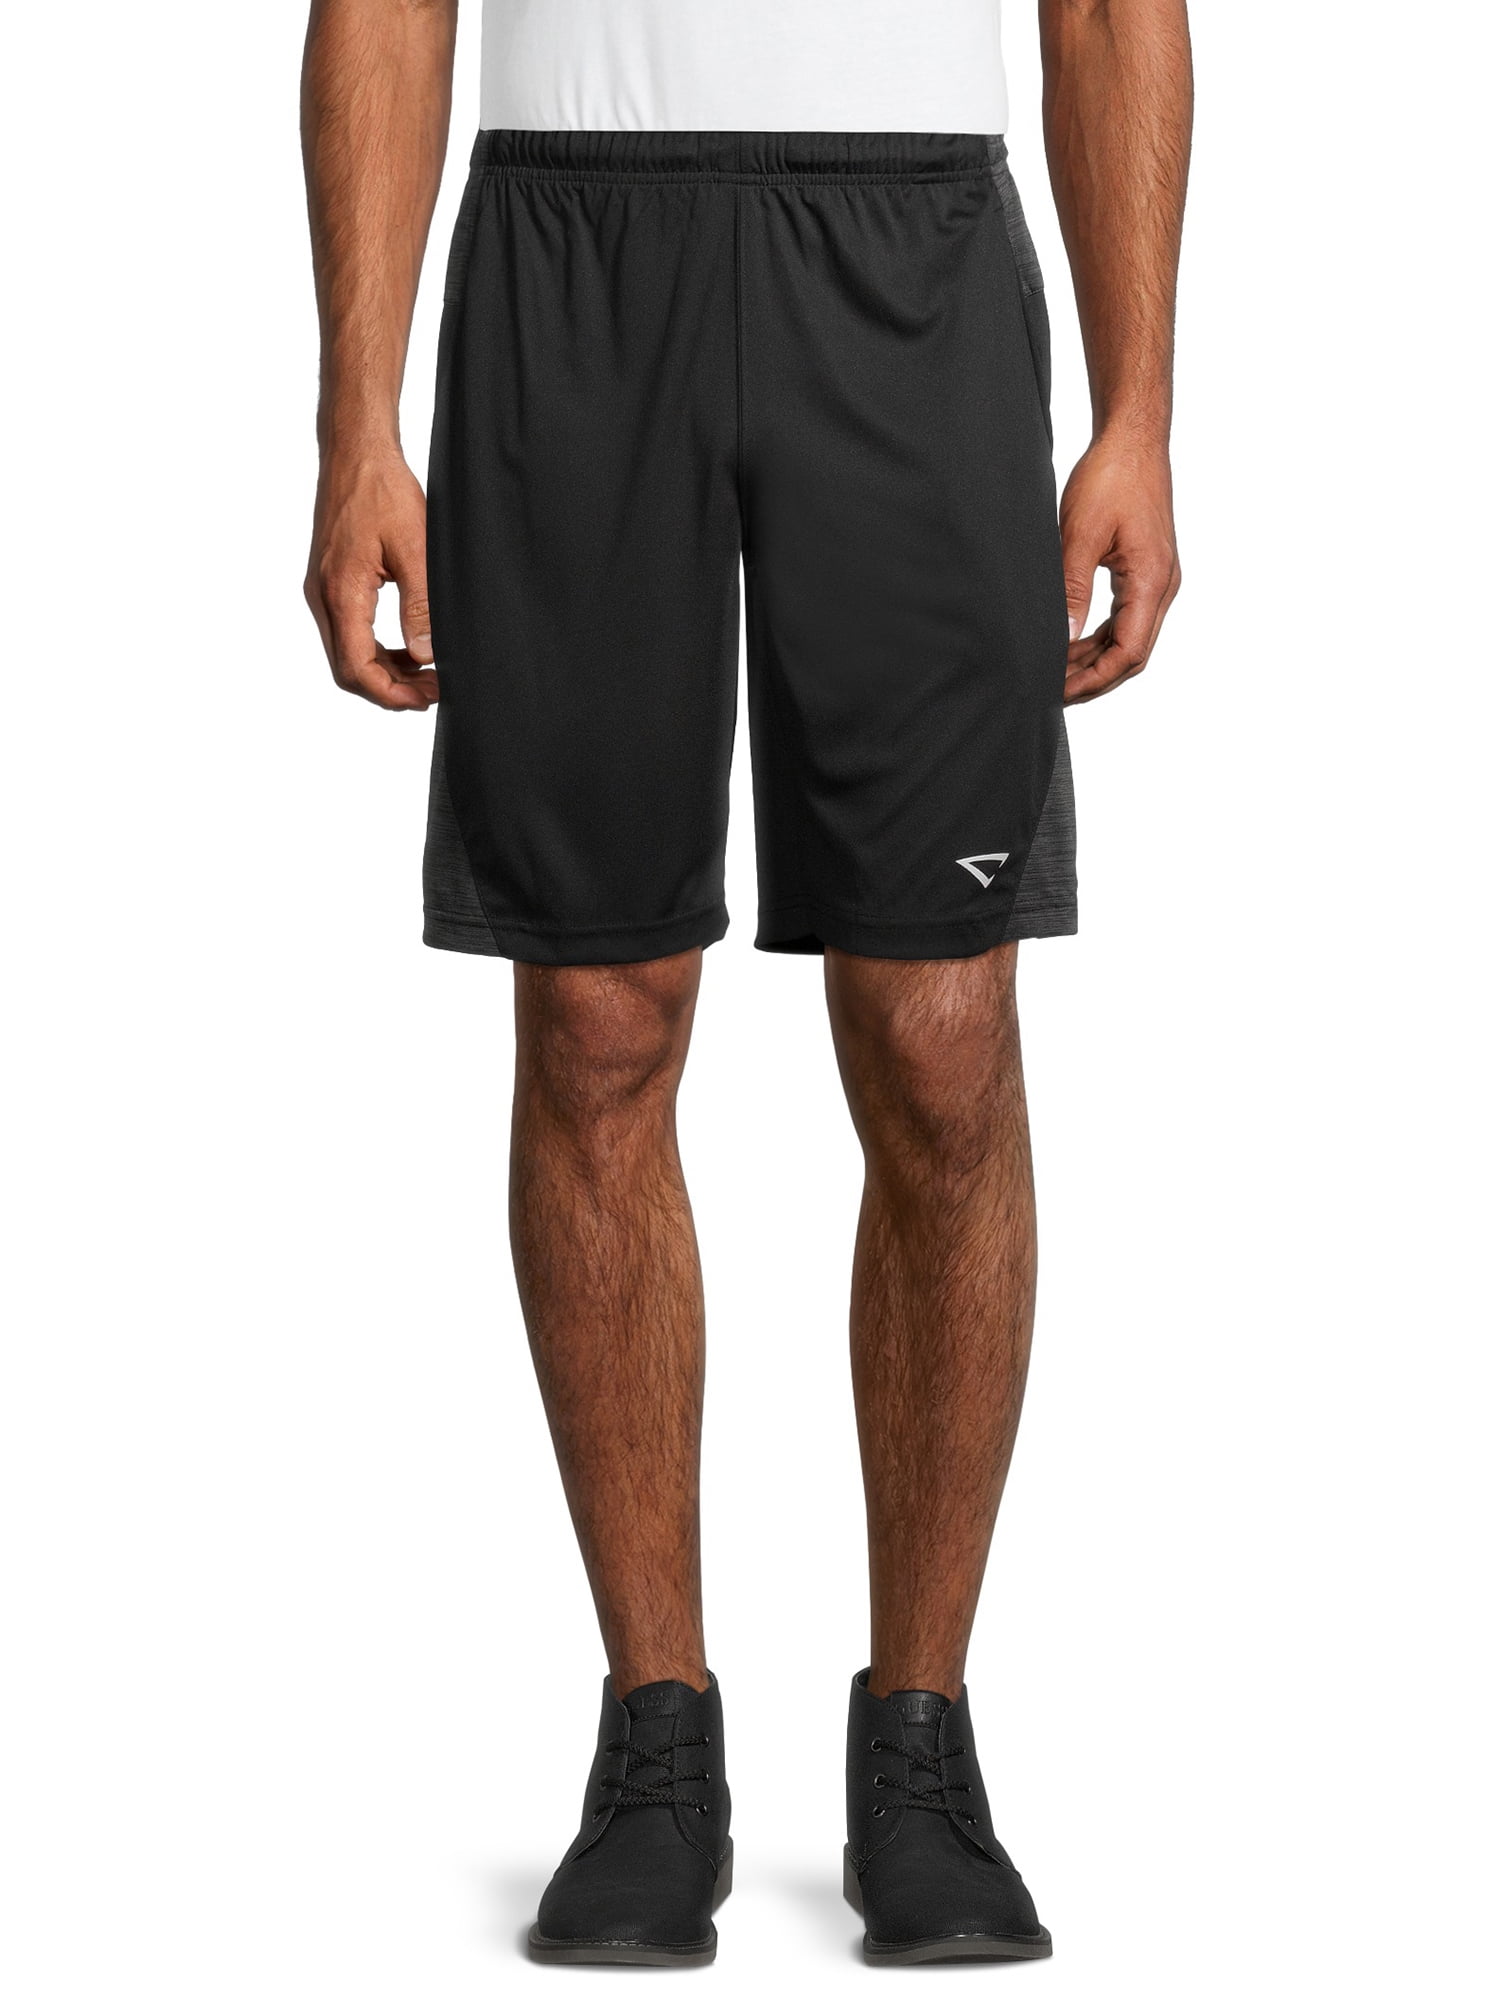 Cheetah Men's Dynamic Athletic Shorts - Walmart.com